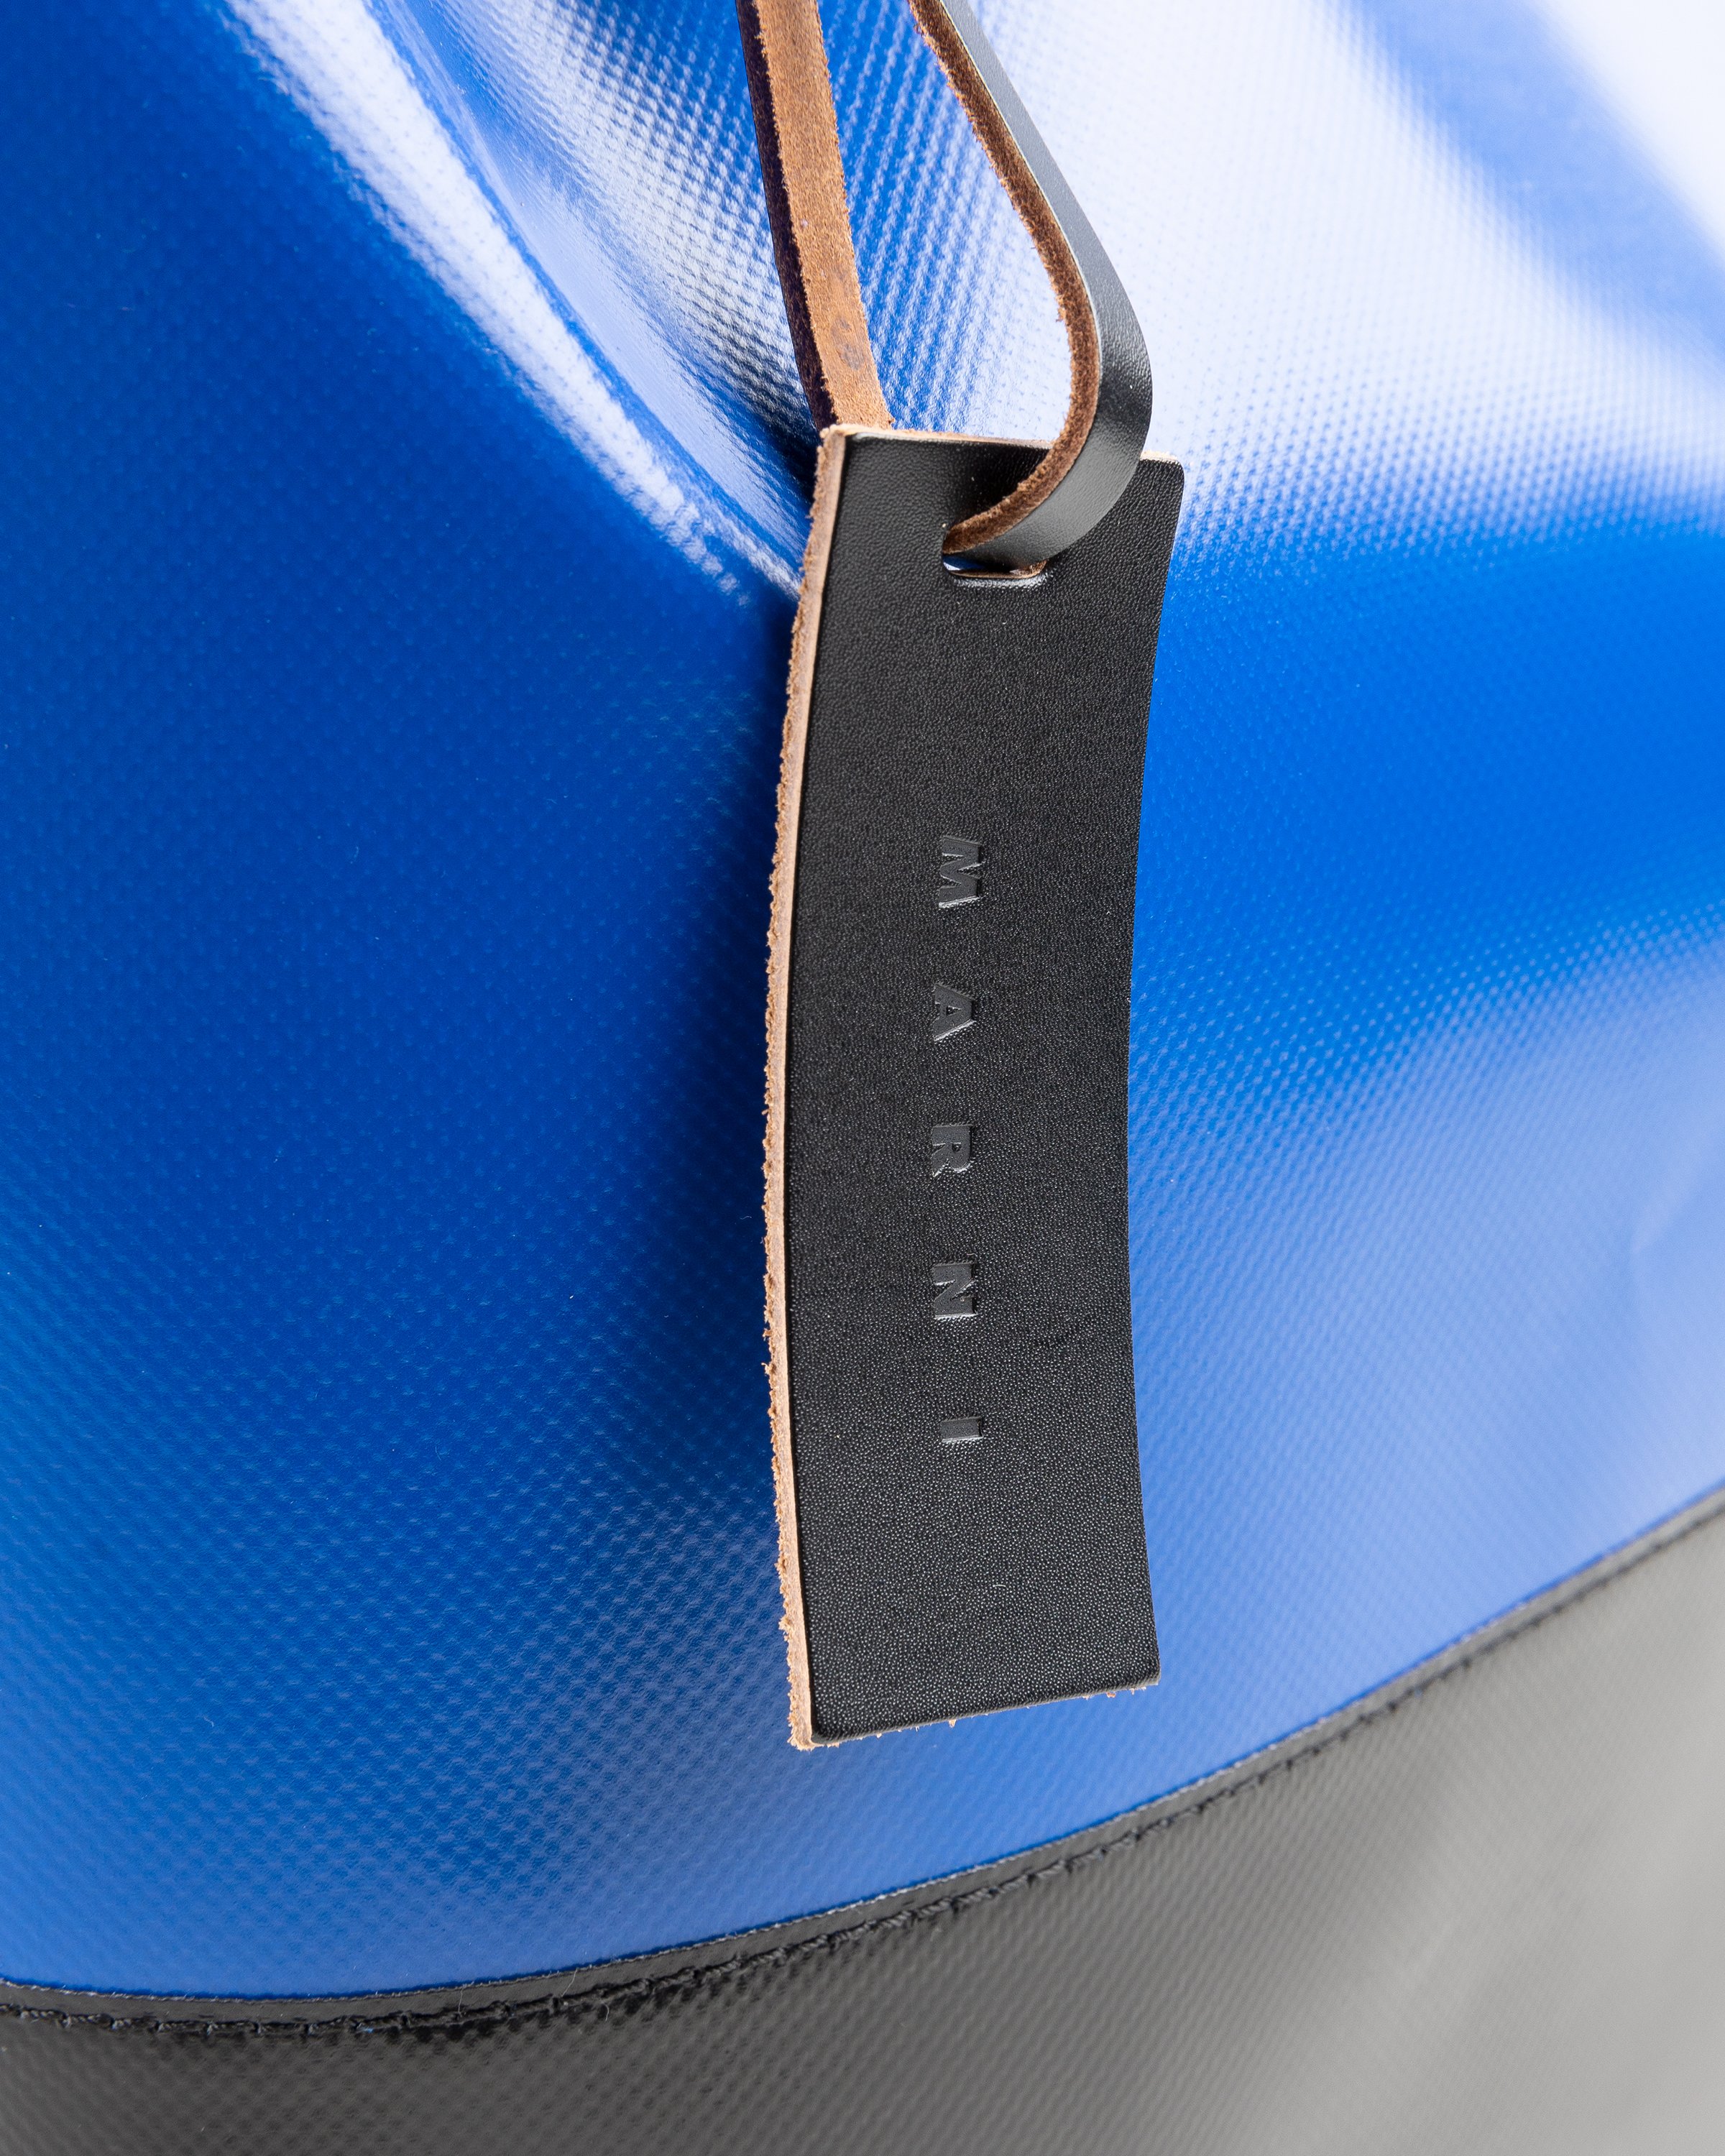 Marni - Tribeca Two-Tone Tote Bag Blue - Accessories - Blue - Image 6